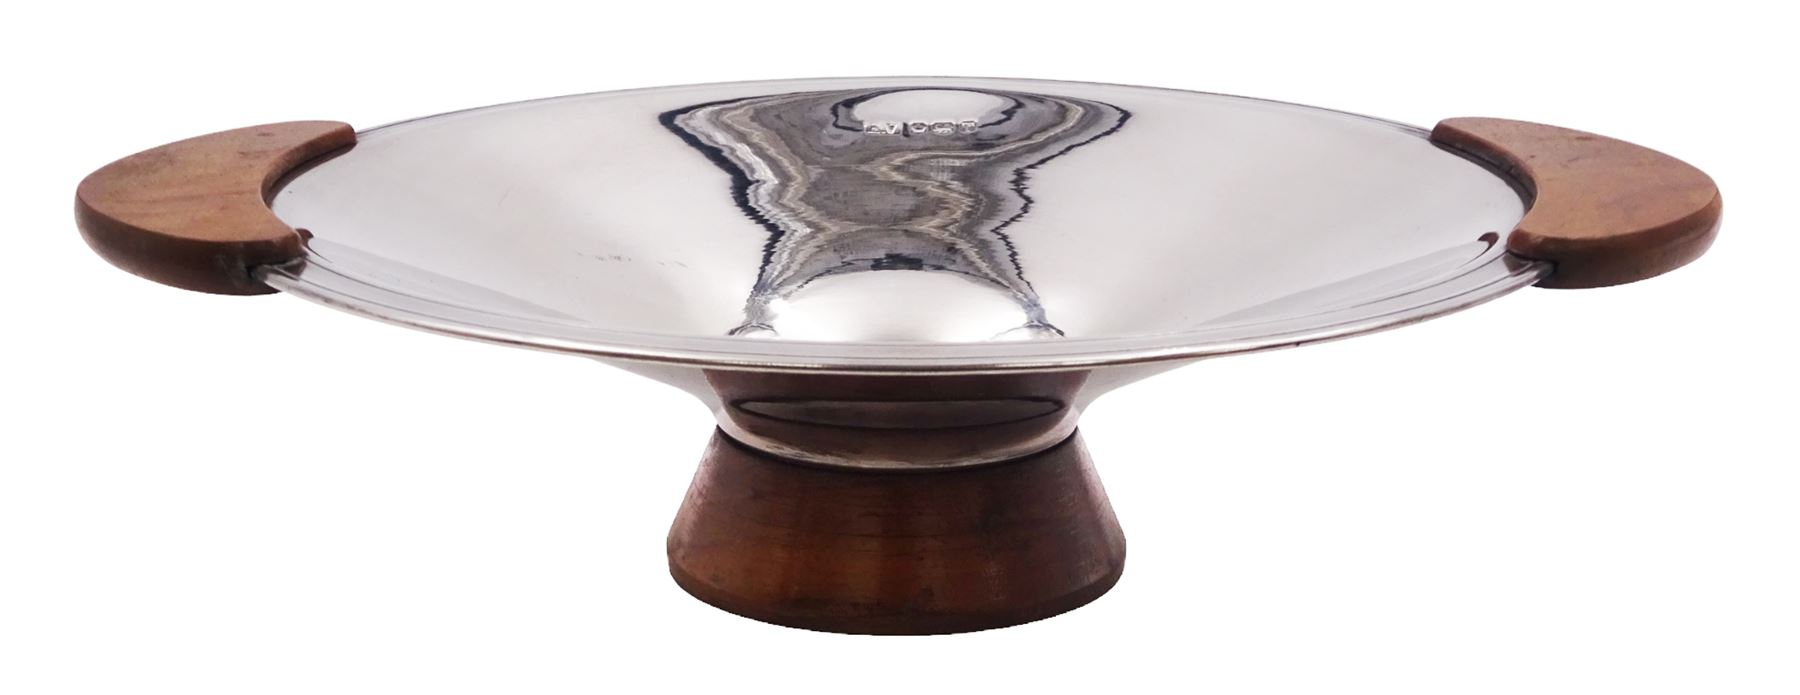 Mid 20th century silver pedestal bowl